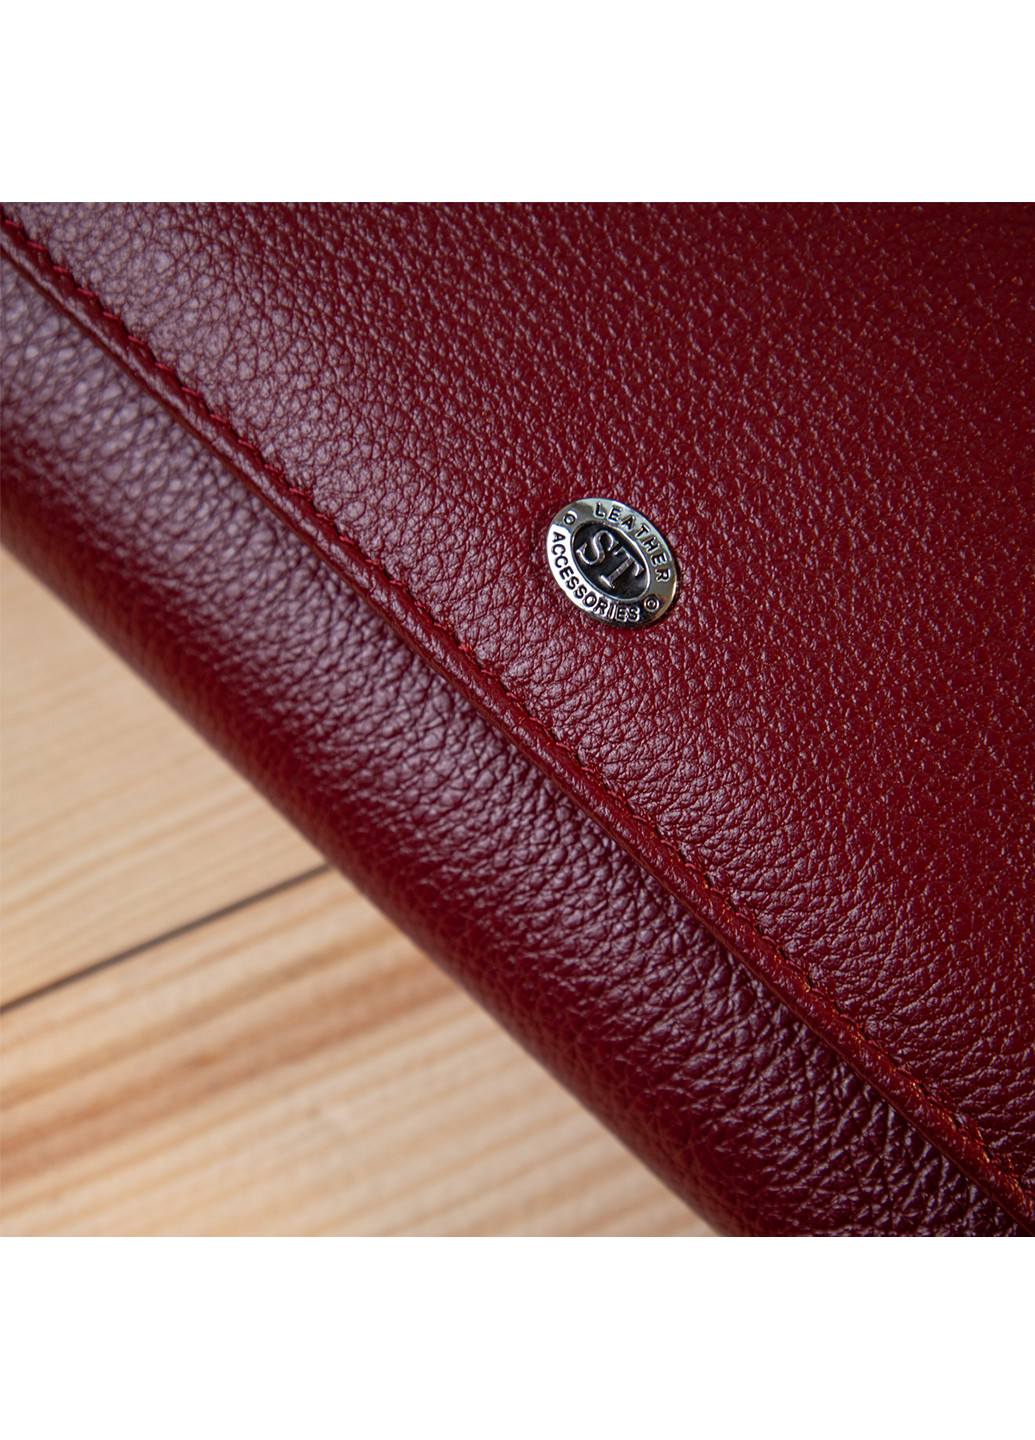 Женский кожаный кошелек 19х10х3 см st leather (242189096)